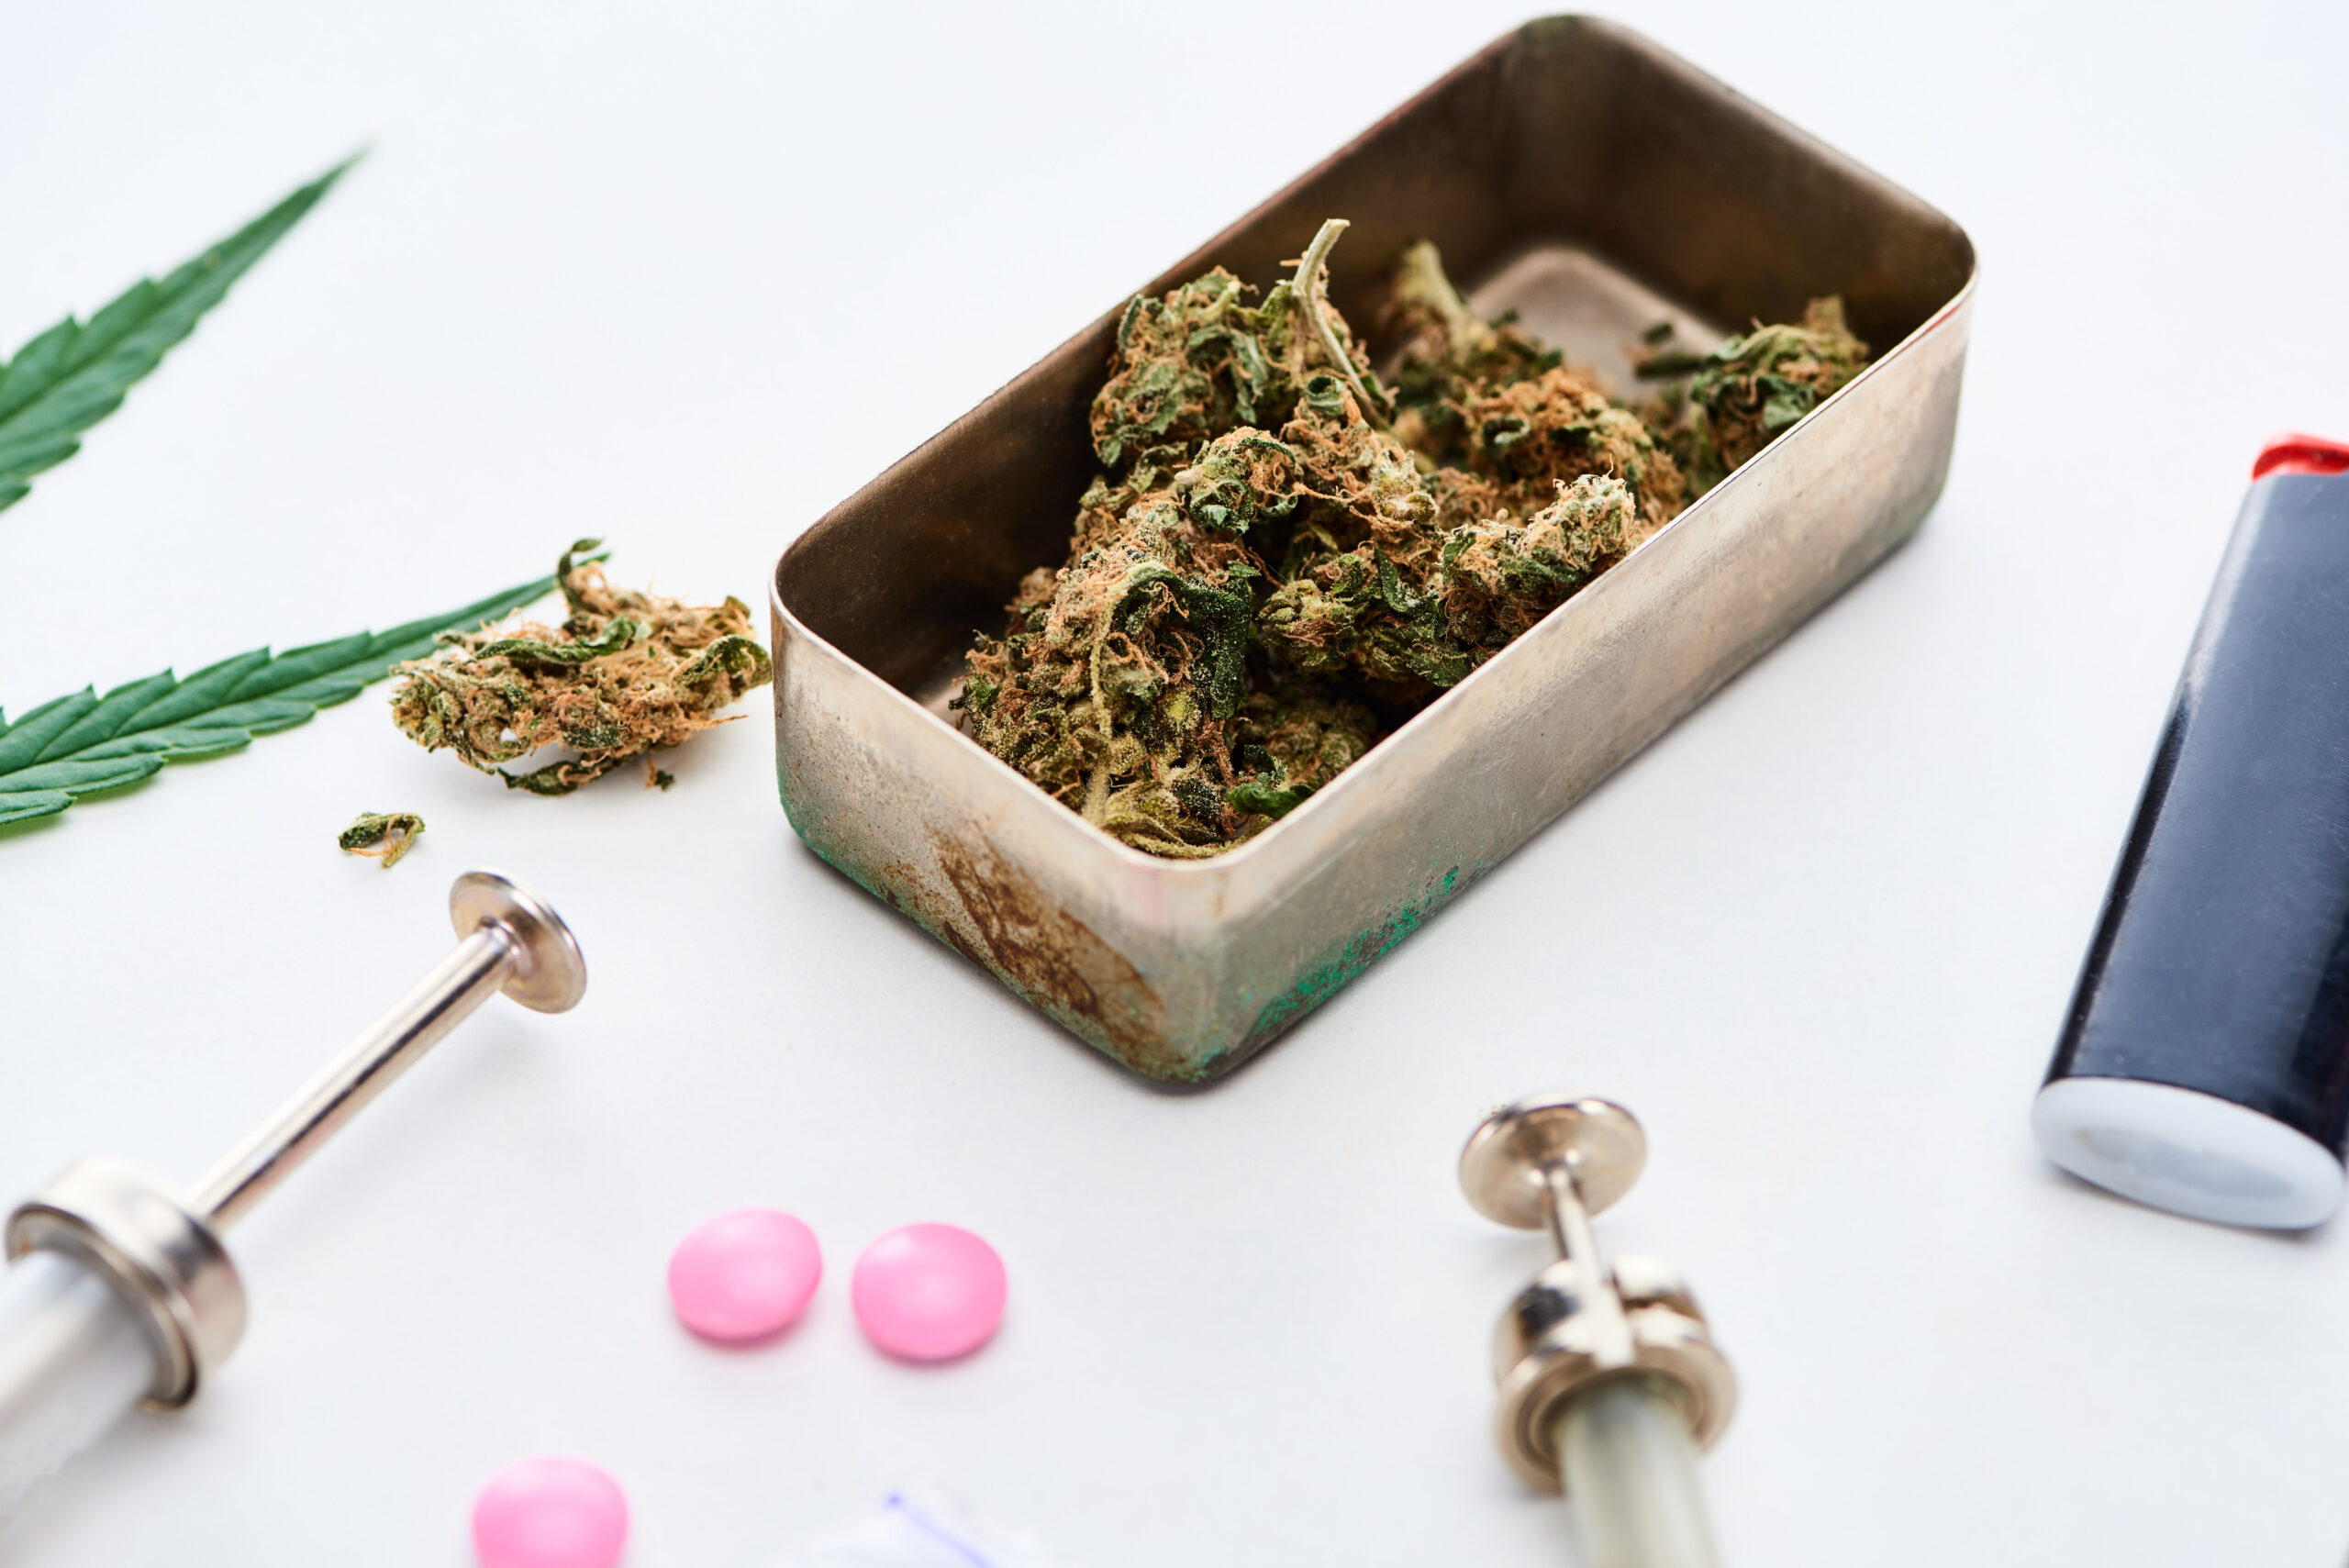 close-up-view-of-marijuana-buds-syringes-and-ligh